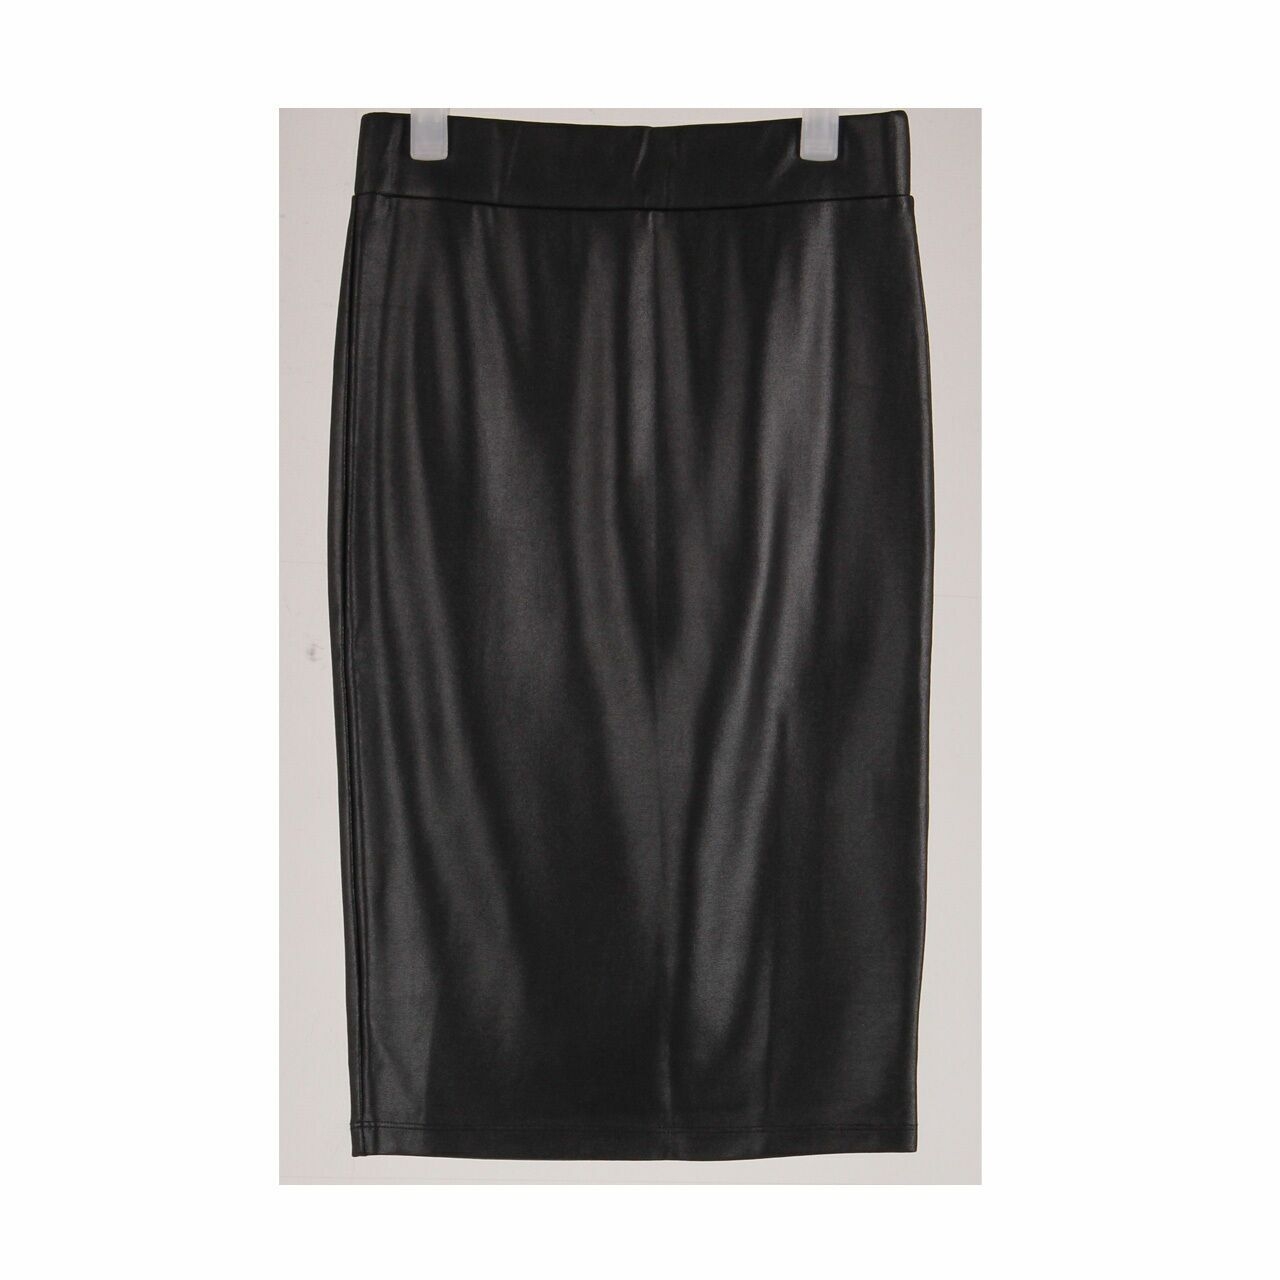 Witchery Black Leather Mini Skirt